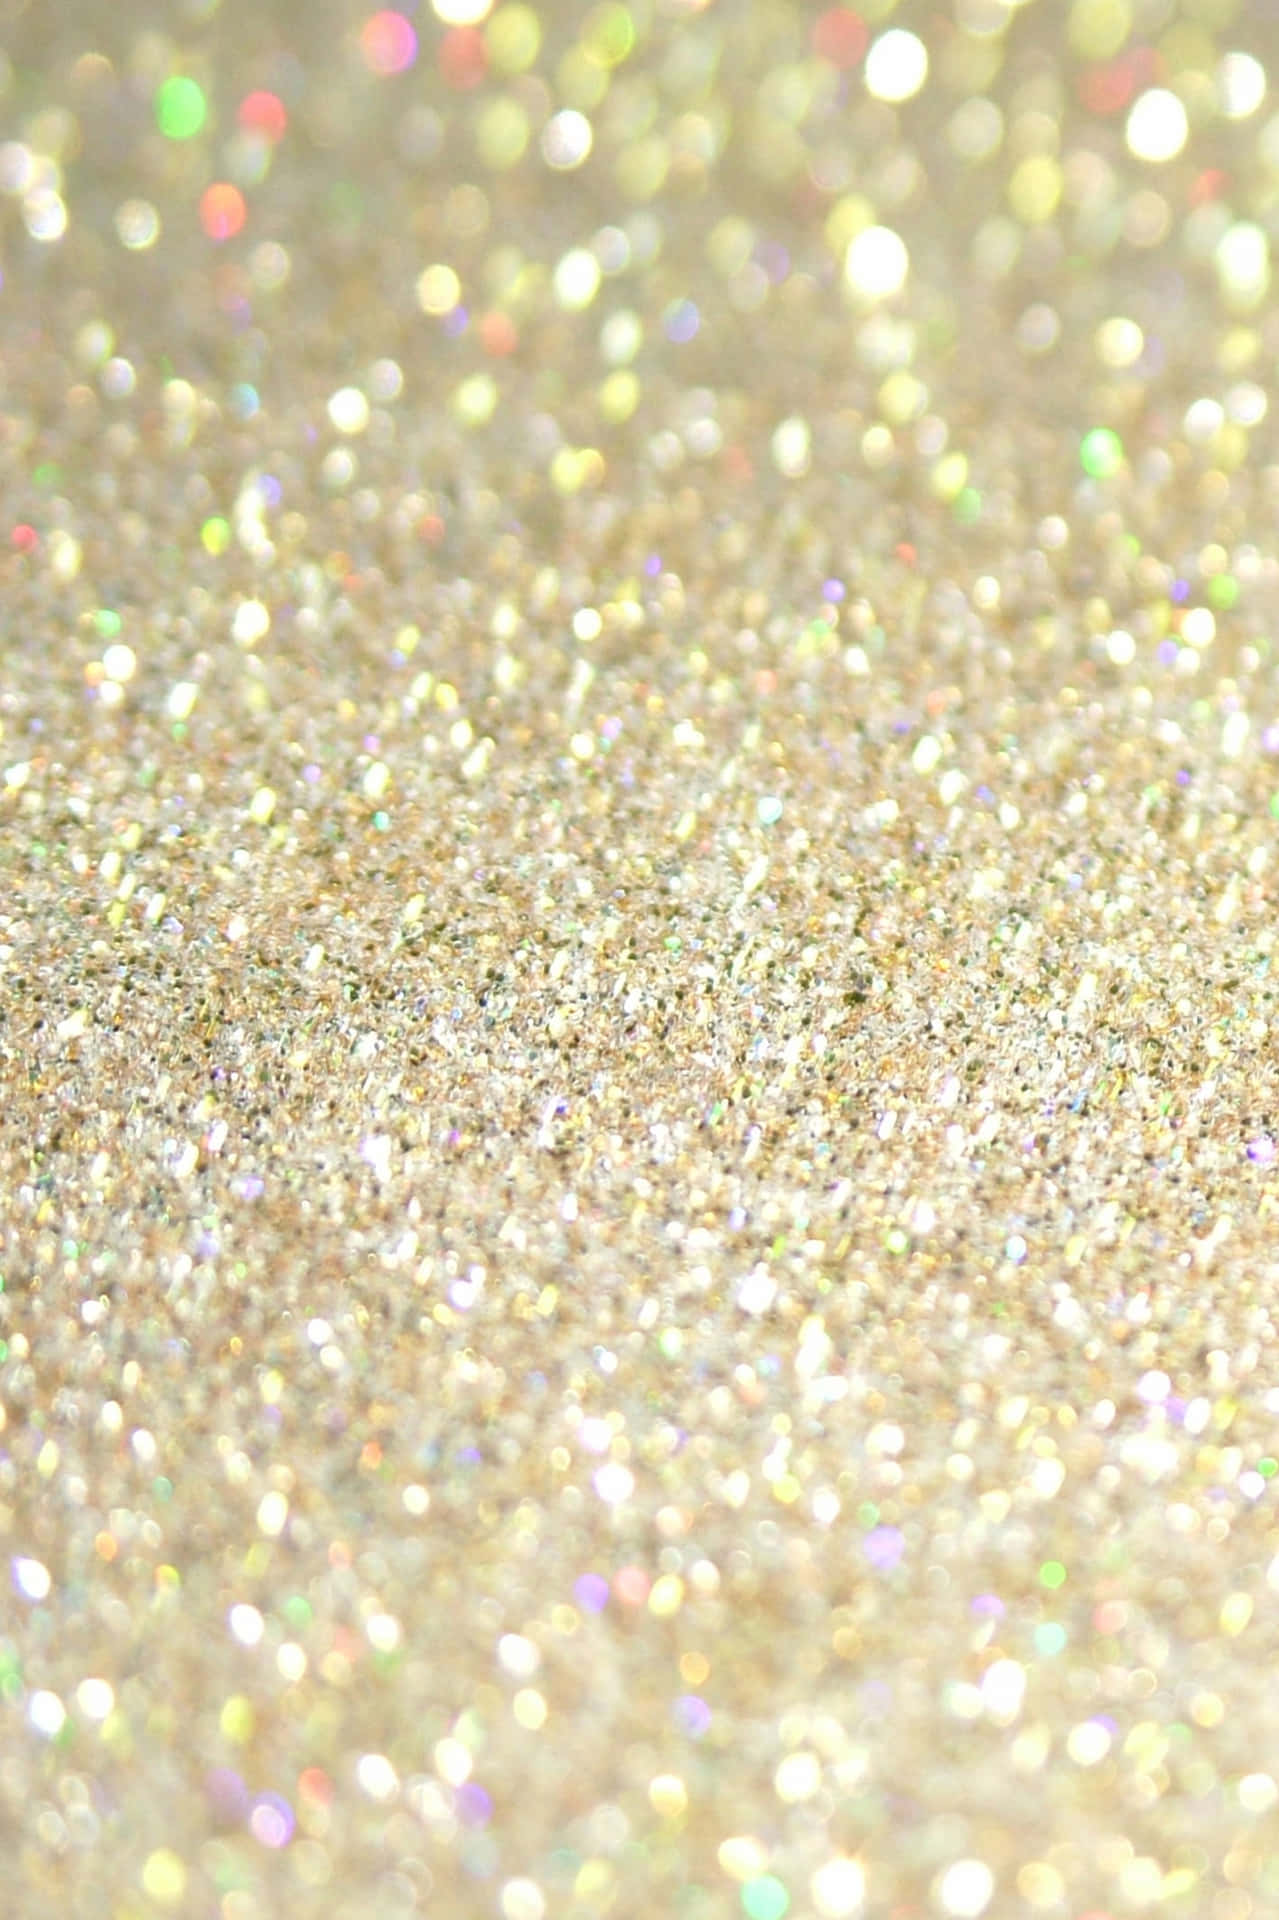 A Close Up Of A Gold Glitter Background